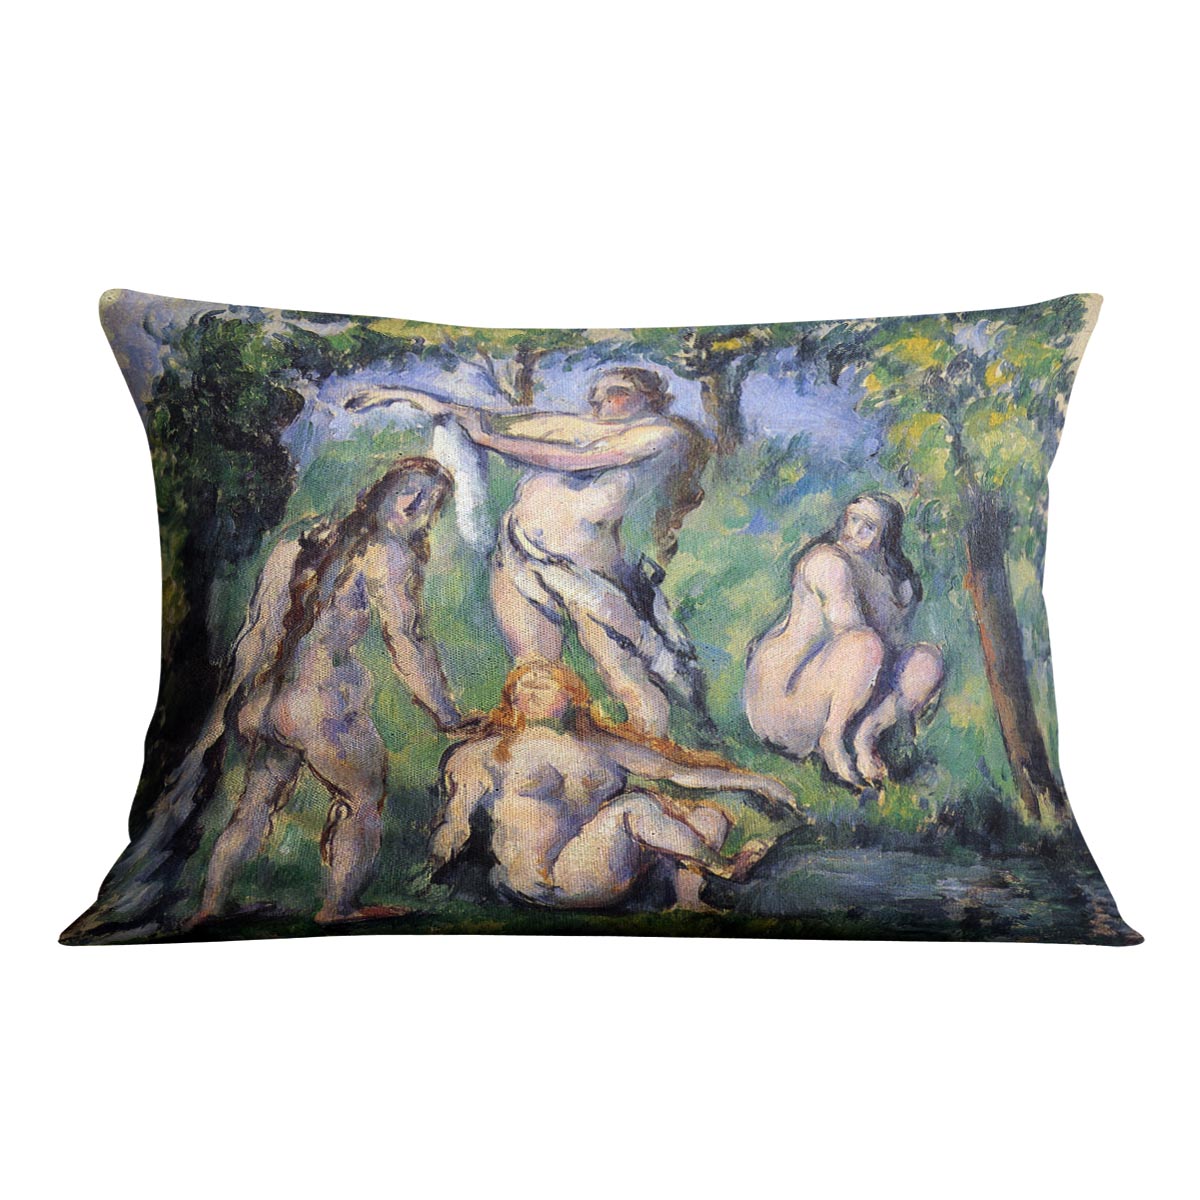 Bathers 2 by Cezanne Cushion - Canvas Art Rocks - 4